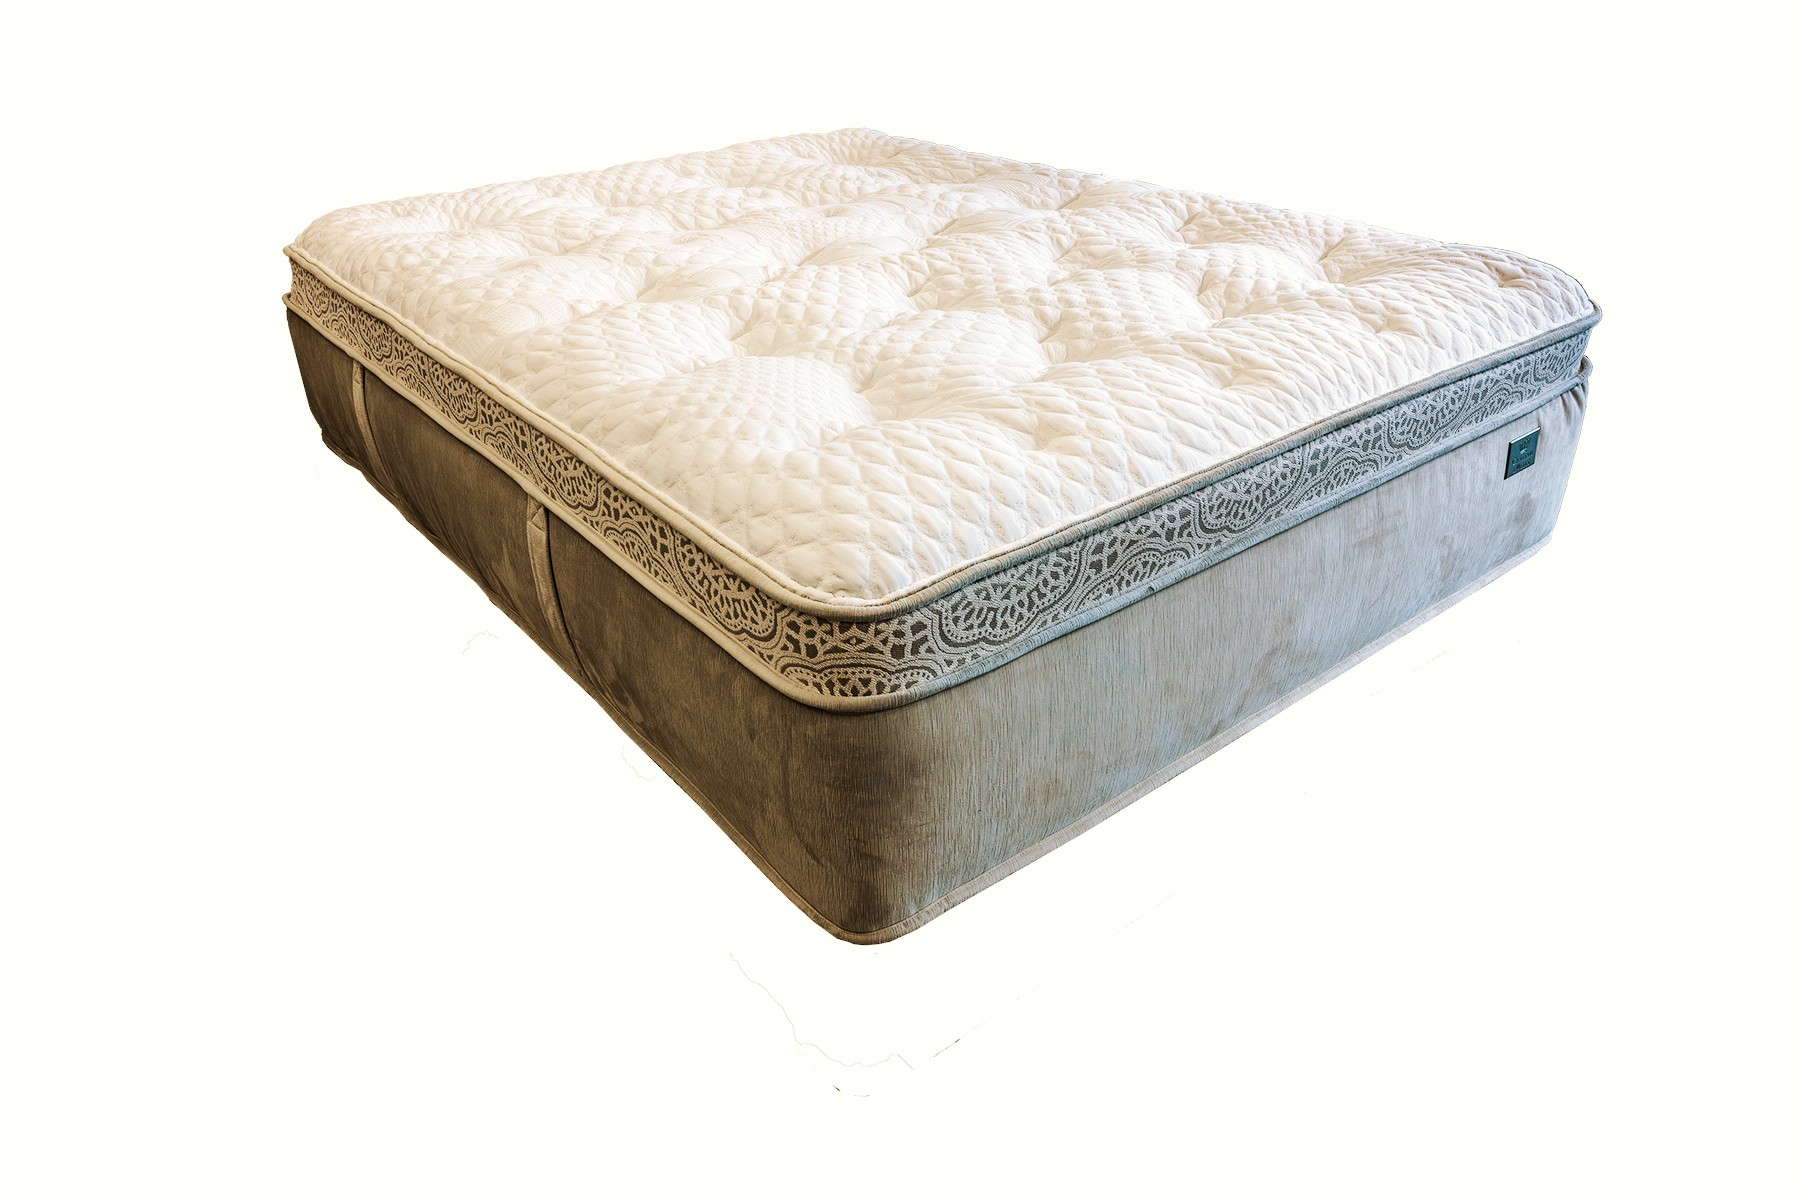 chattam and wells mattress price